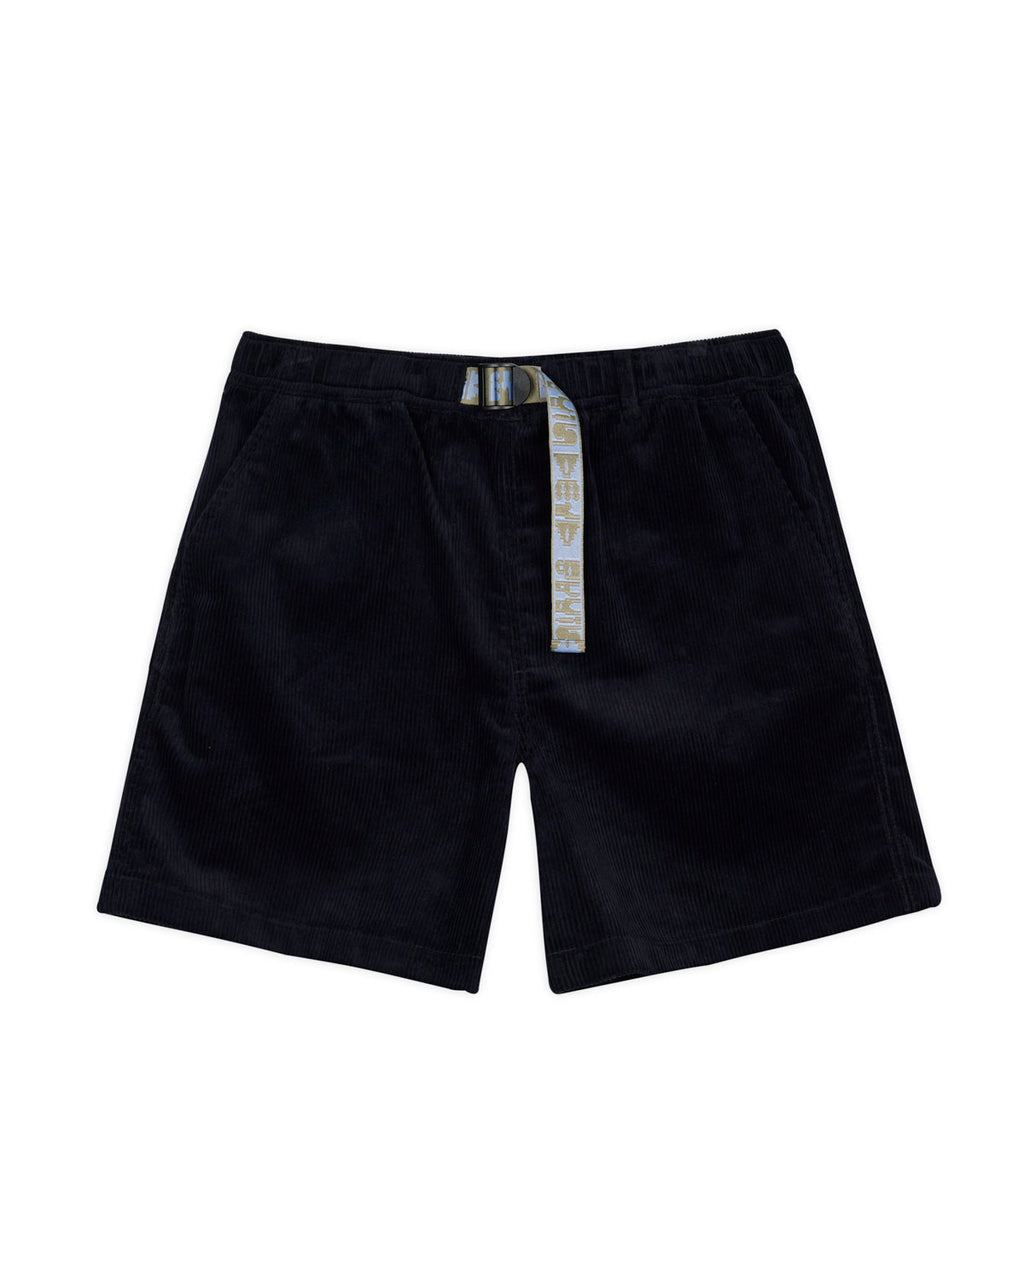 Cord Climber Shorts, Black Smoke